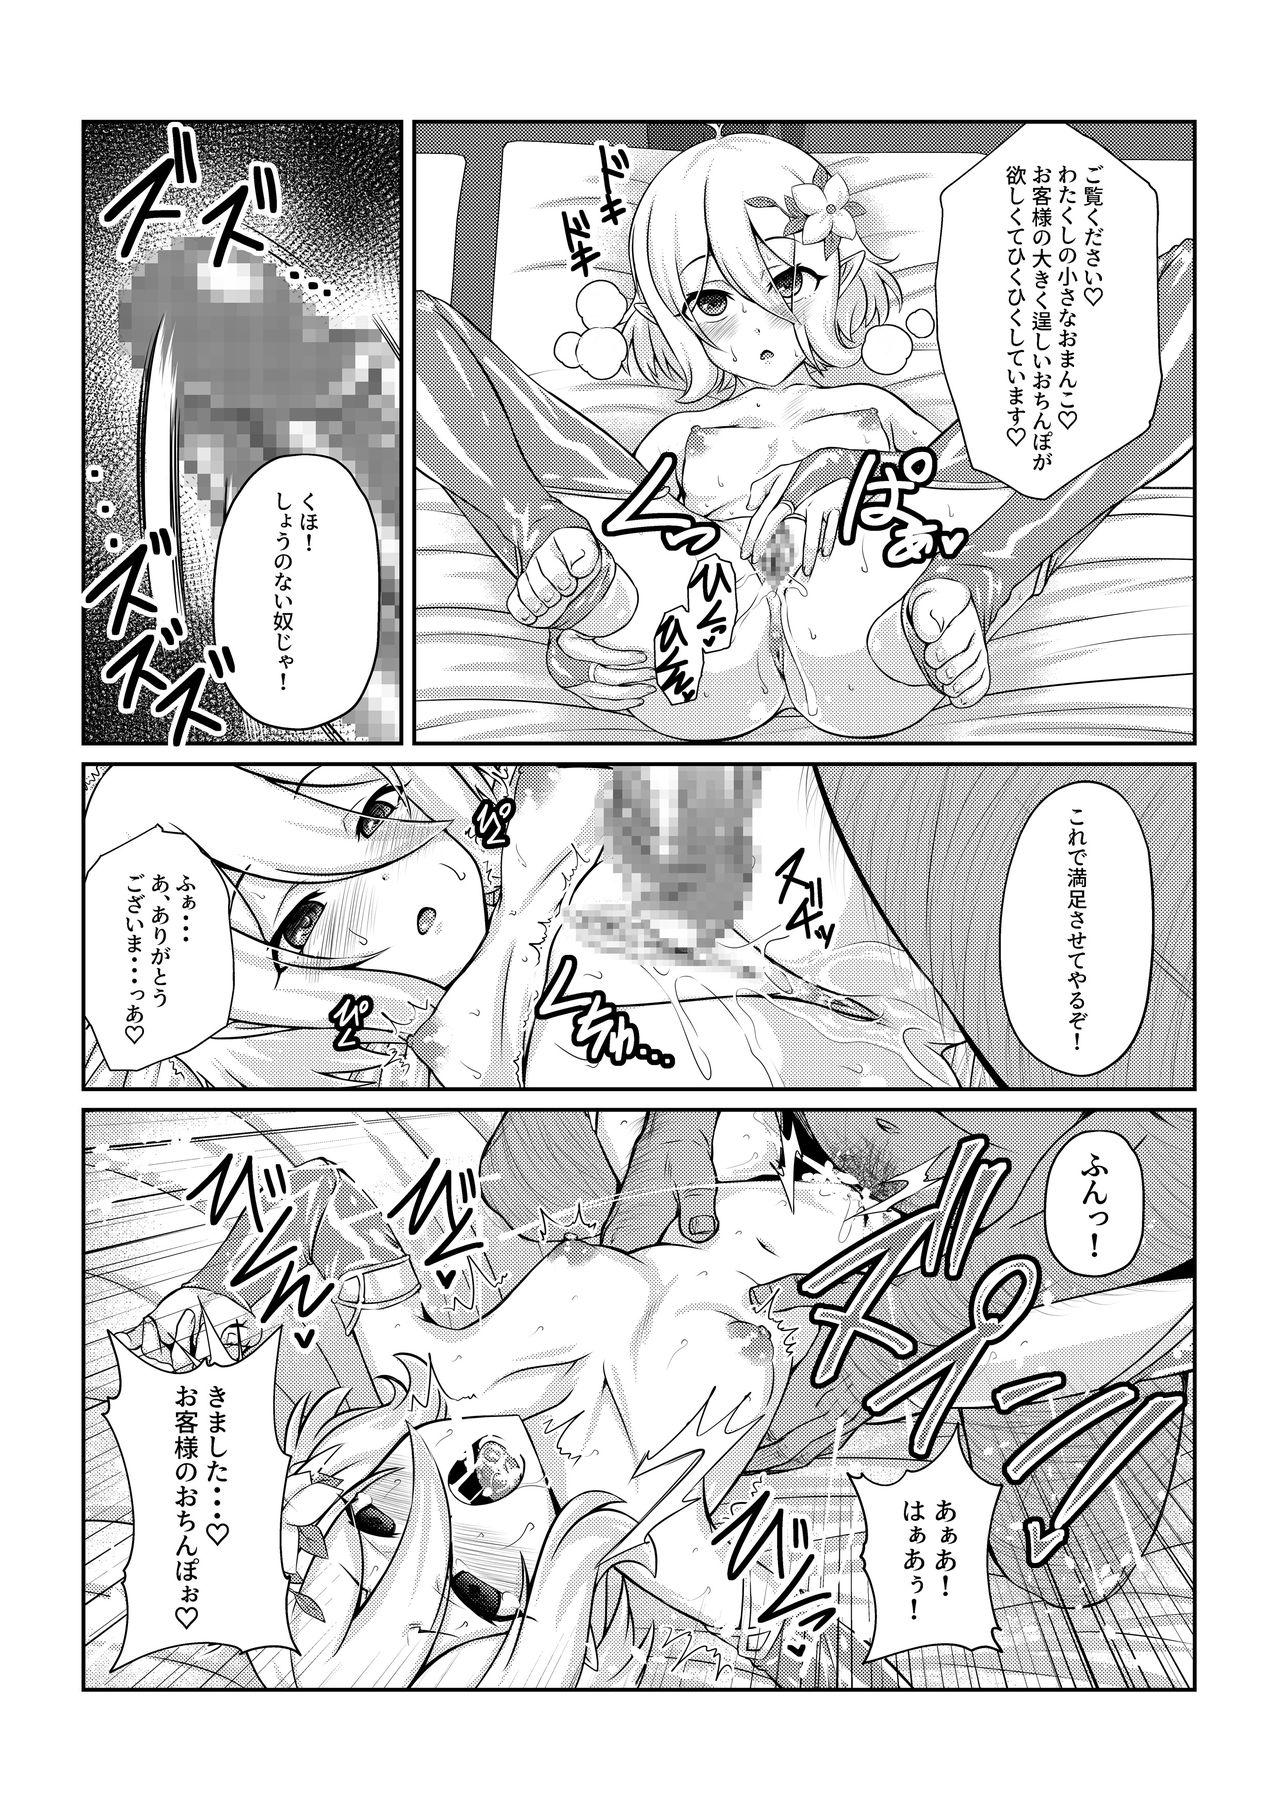 Flaca [Fuwa Fuwa Pinkchan] -Kokoro- (Princess Connect Re:Dive) - Princess connect Finger - Page 9